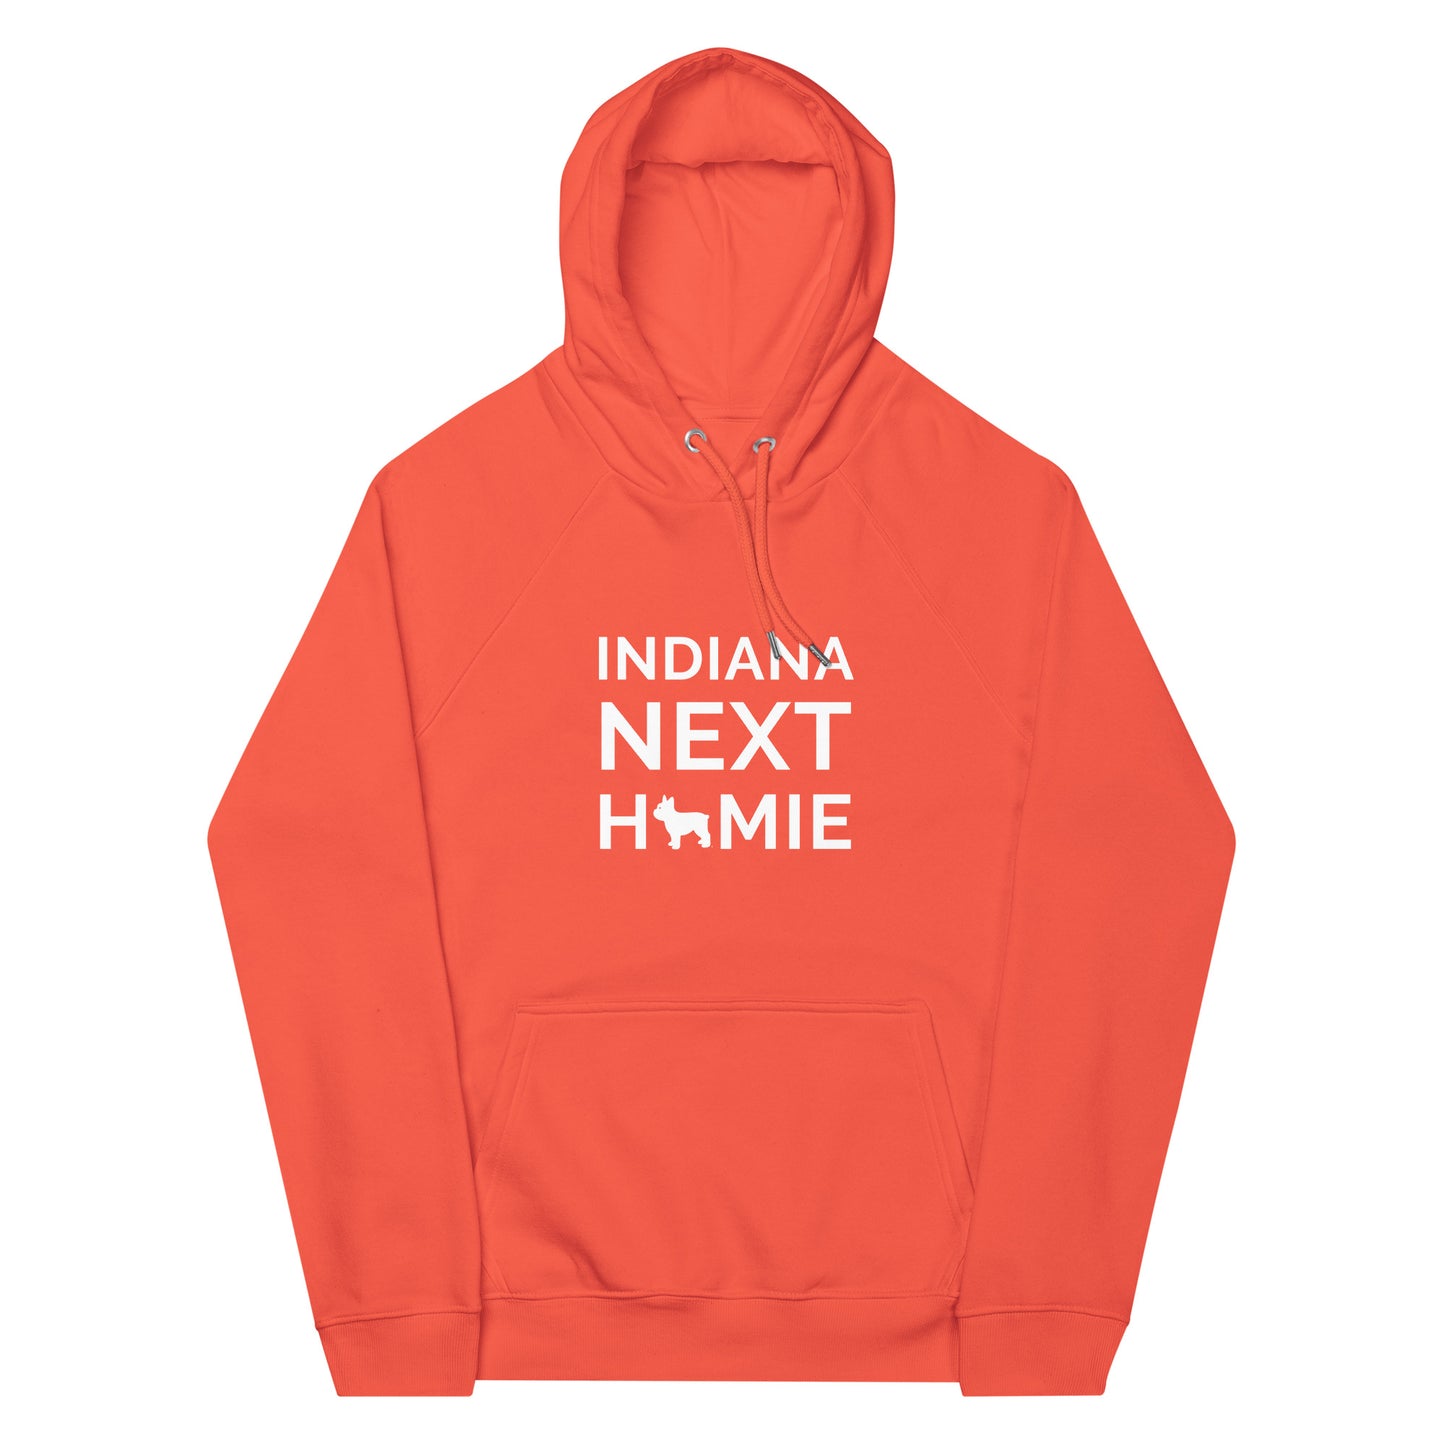 Indiana NextHomie Unisex eco raglan hoodie